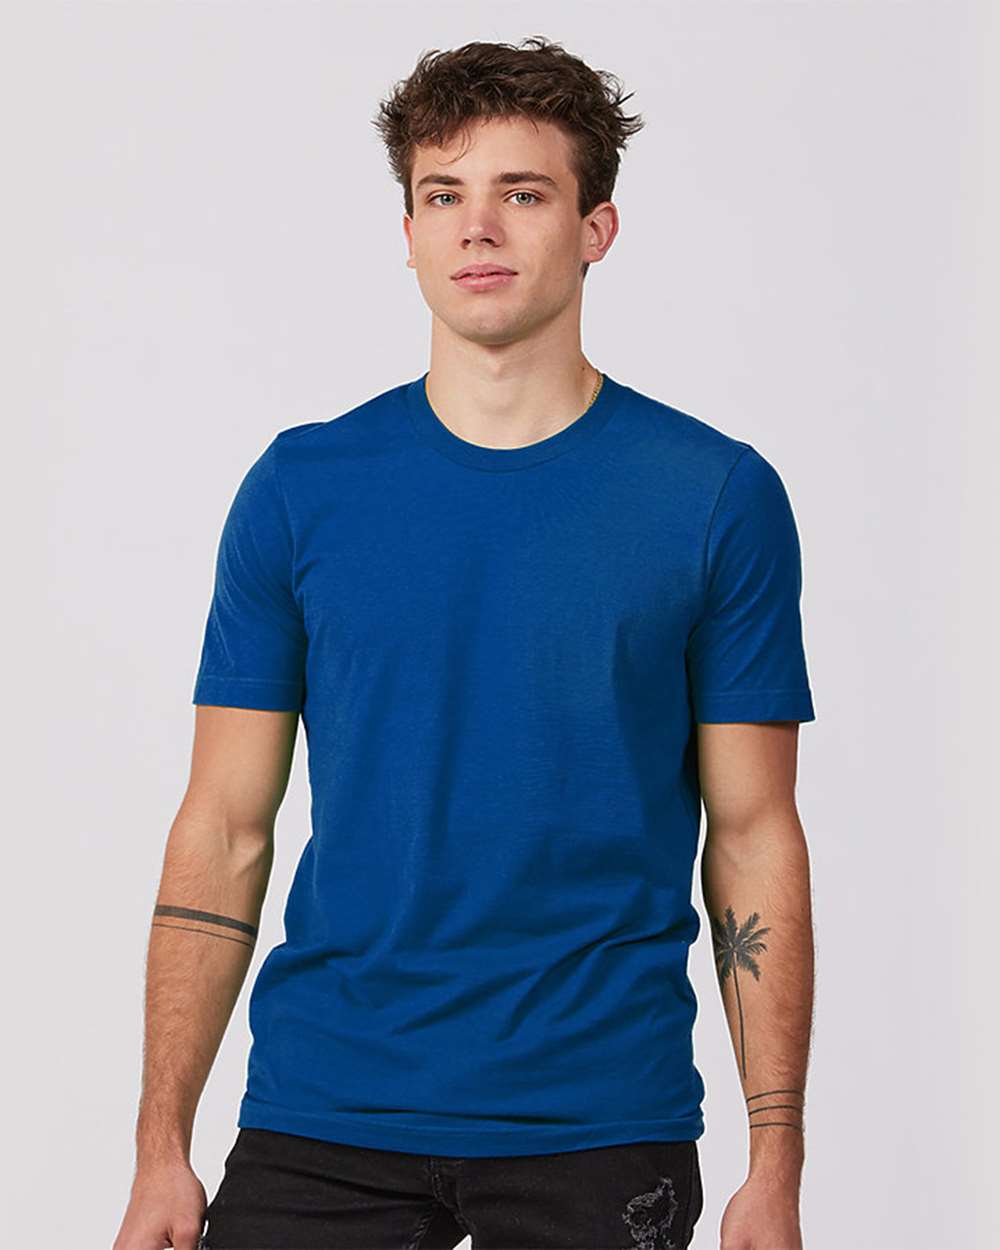 Tultex - Premium Cotton T-Shirt - 502 Bulk Royal Blue